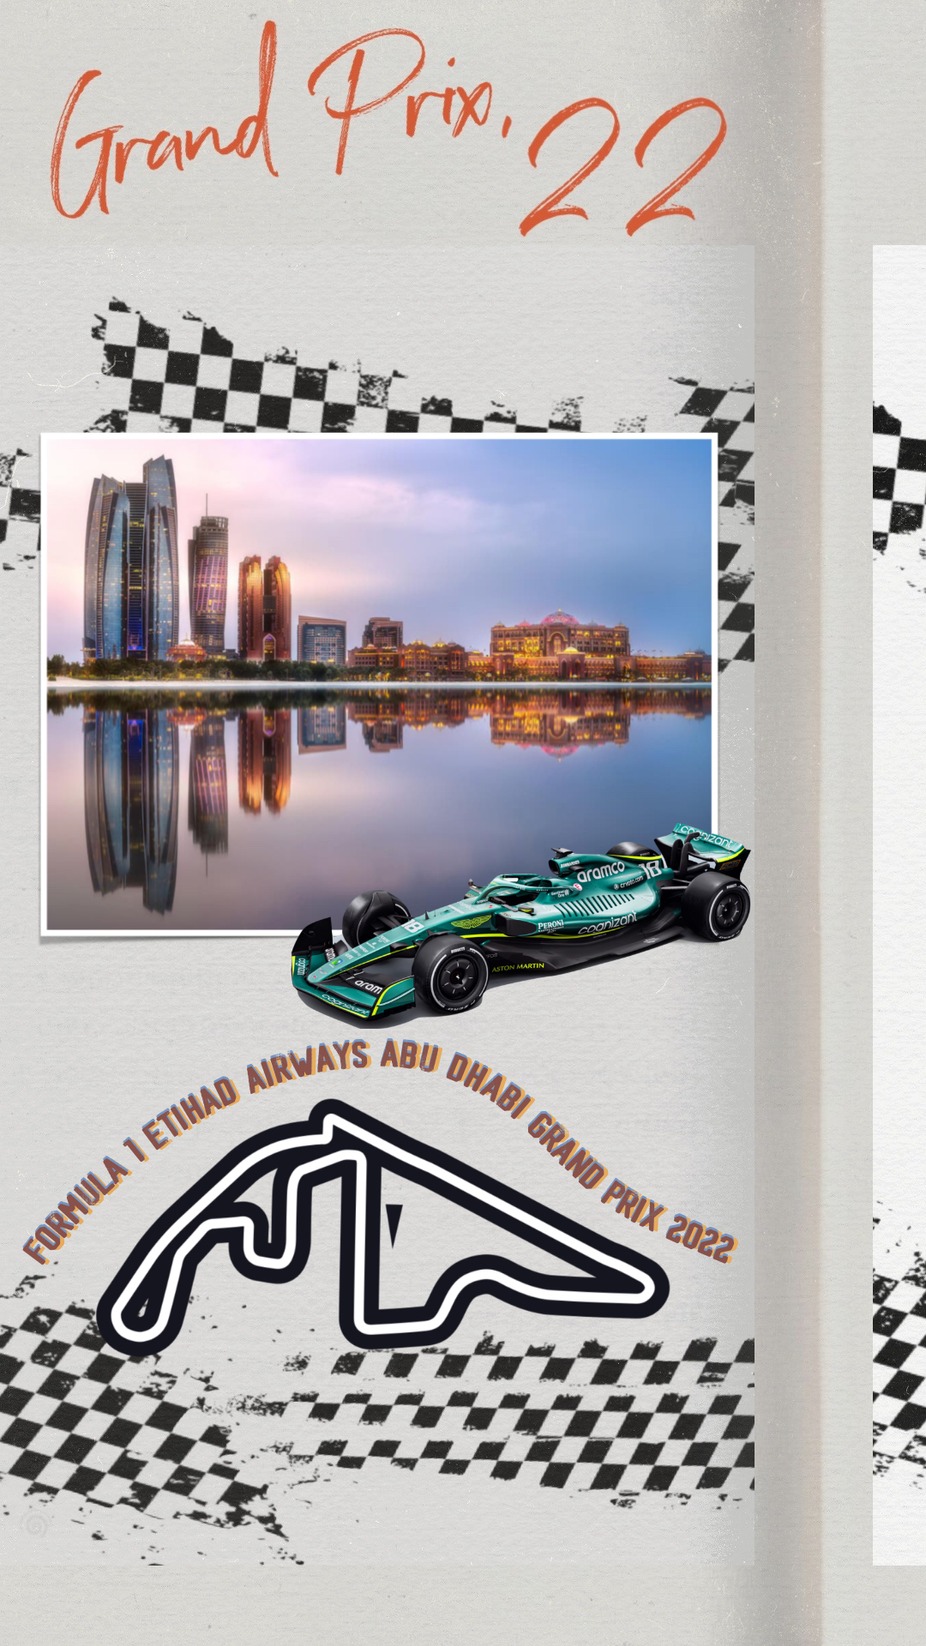 Formula 1 Etihad Airways Abu Dhabi Grand Prix  2022 event photo